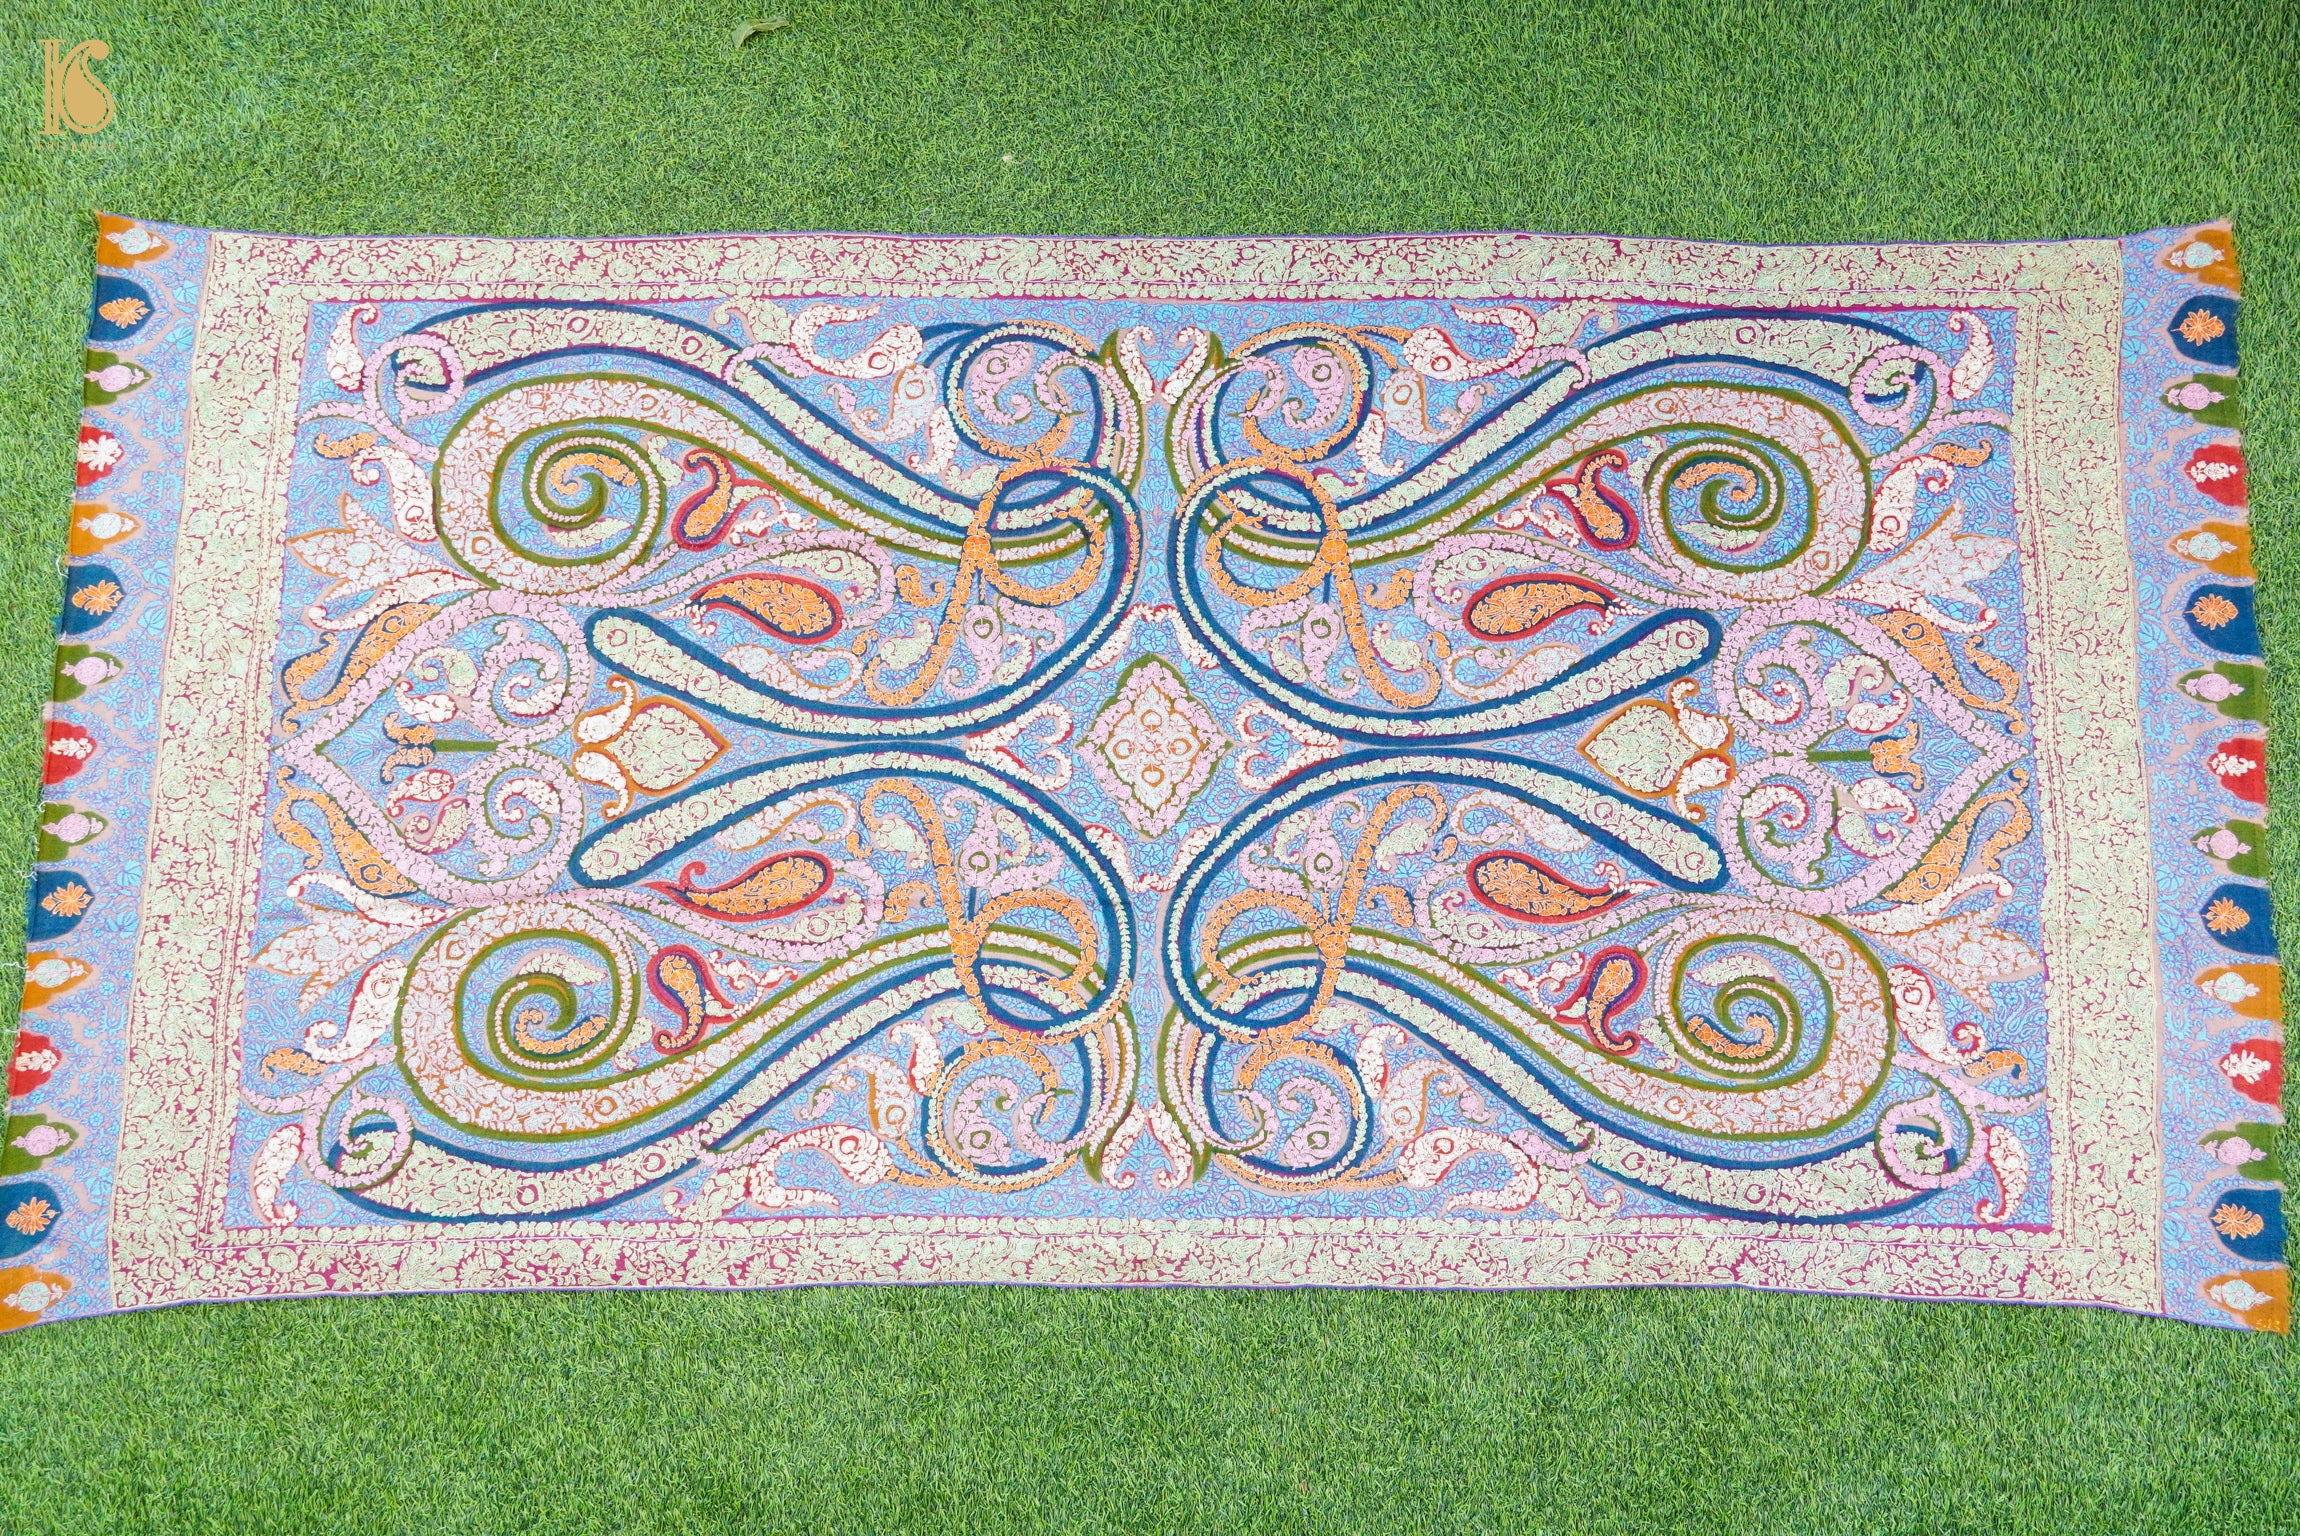 KASHMIR HANDLOOM Multicolor Wool Carpet - Buy KASHMIR HANDLOOM